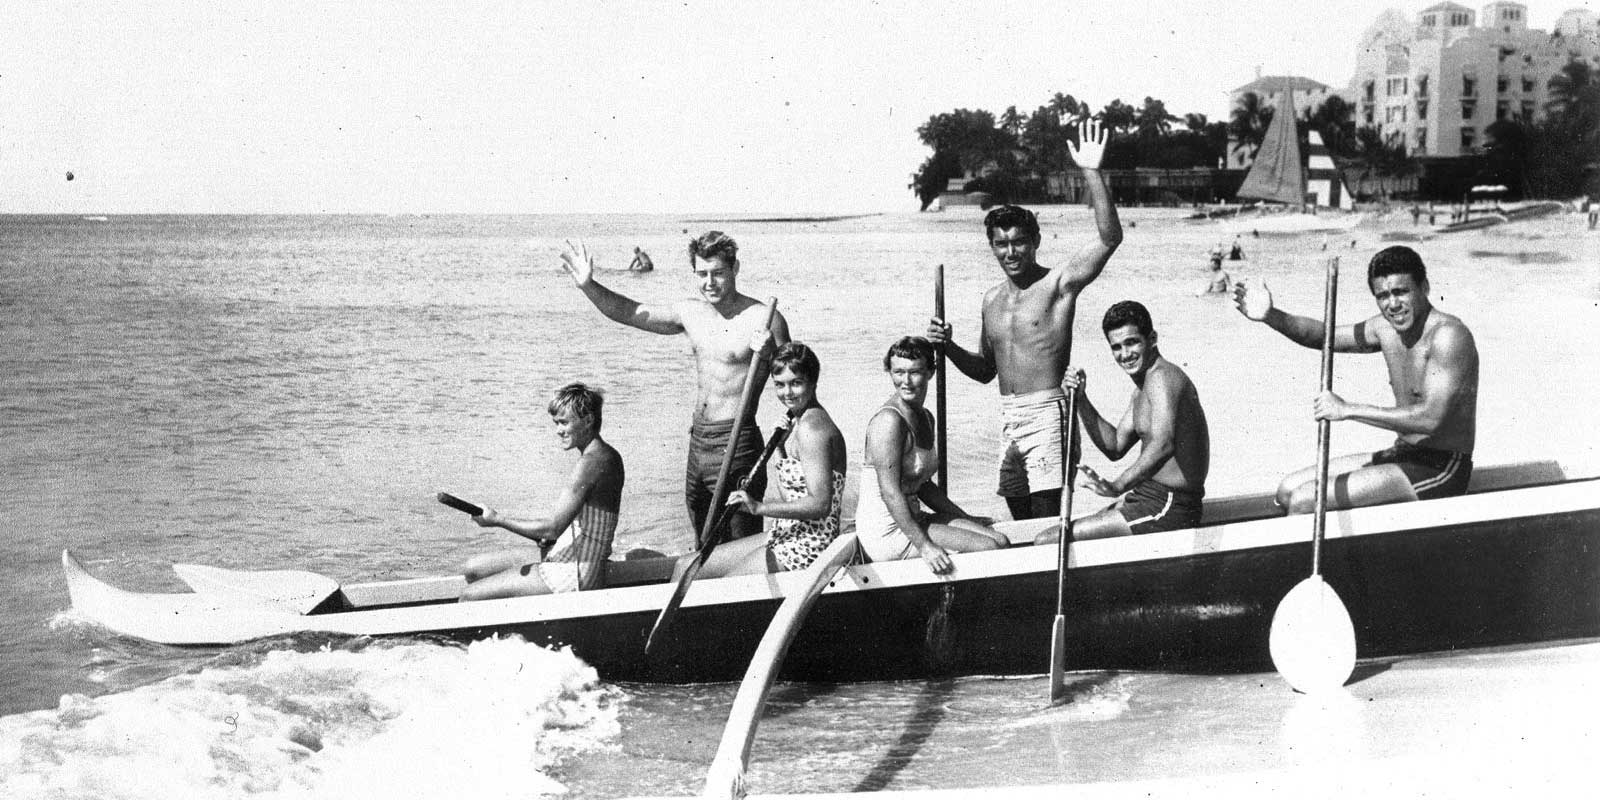 Blackout Whaley, Bobby Krewson, Barry Napoleon at Waikiki 1950s